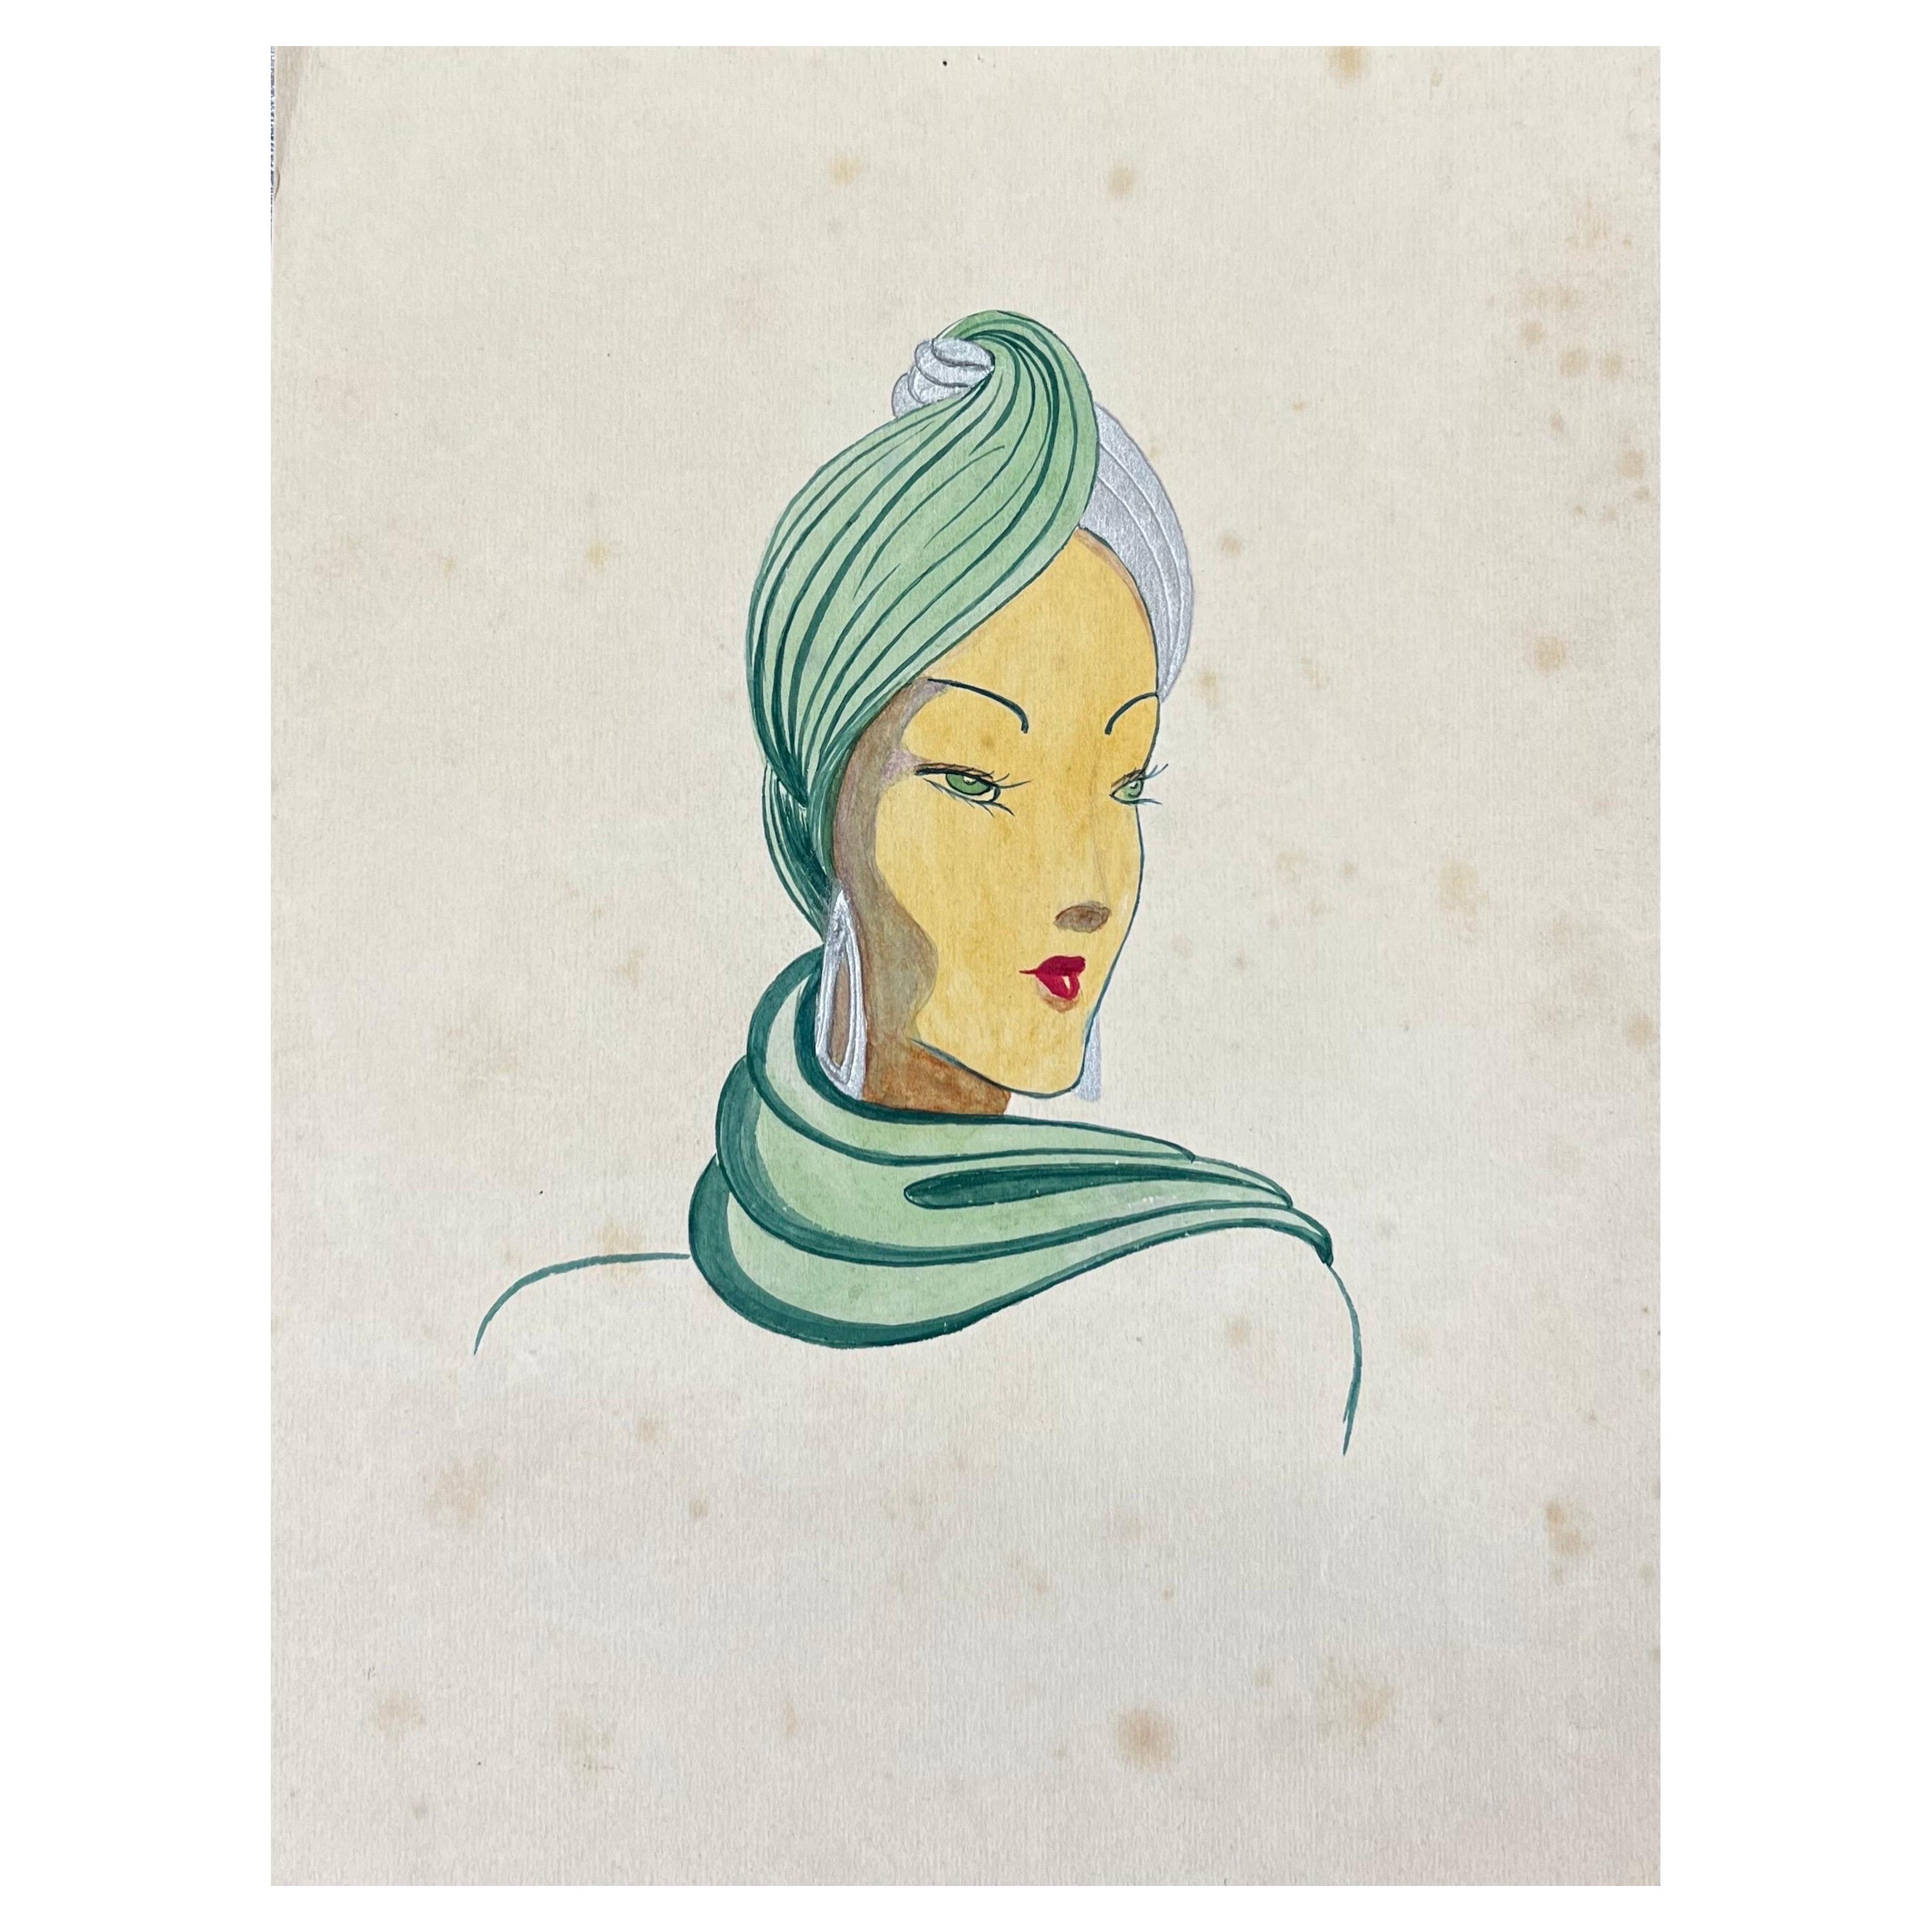 1940er Jahre Mode Illustration, Dame mit schönem grünem Kopf Schal